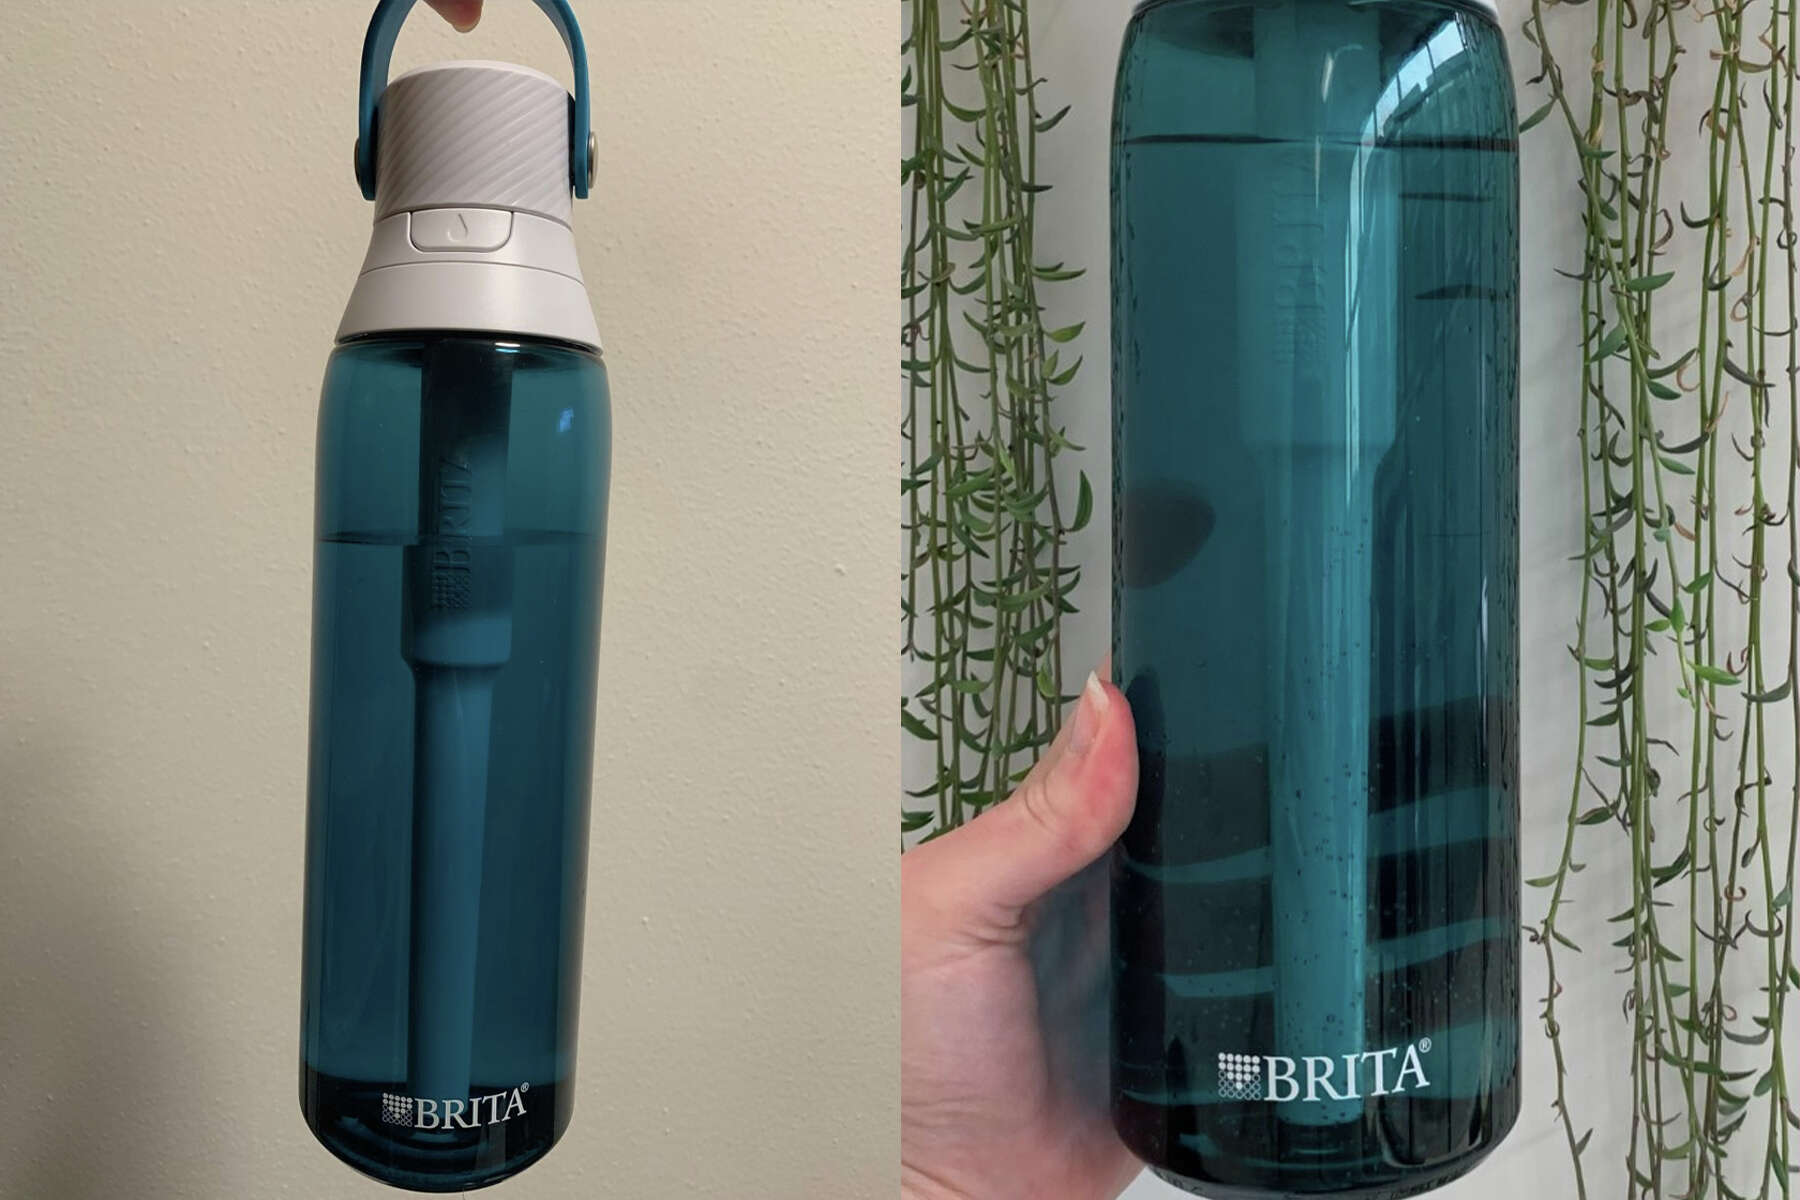 Brita Premium Filtering Water Bottle - by Russ Bell / Core77 Design Awards